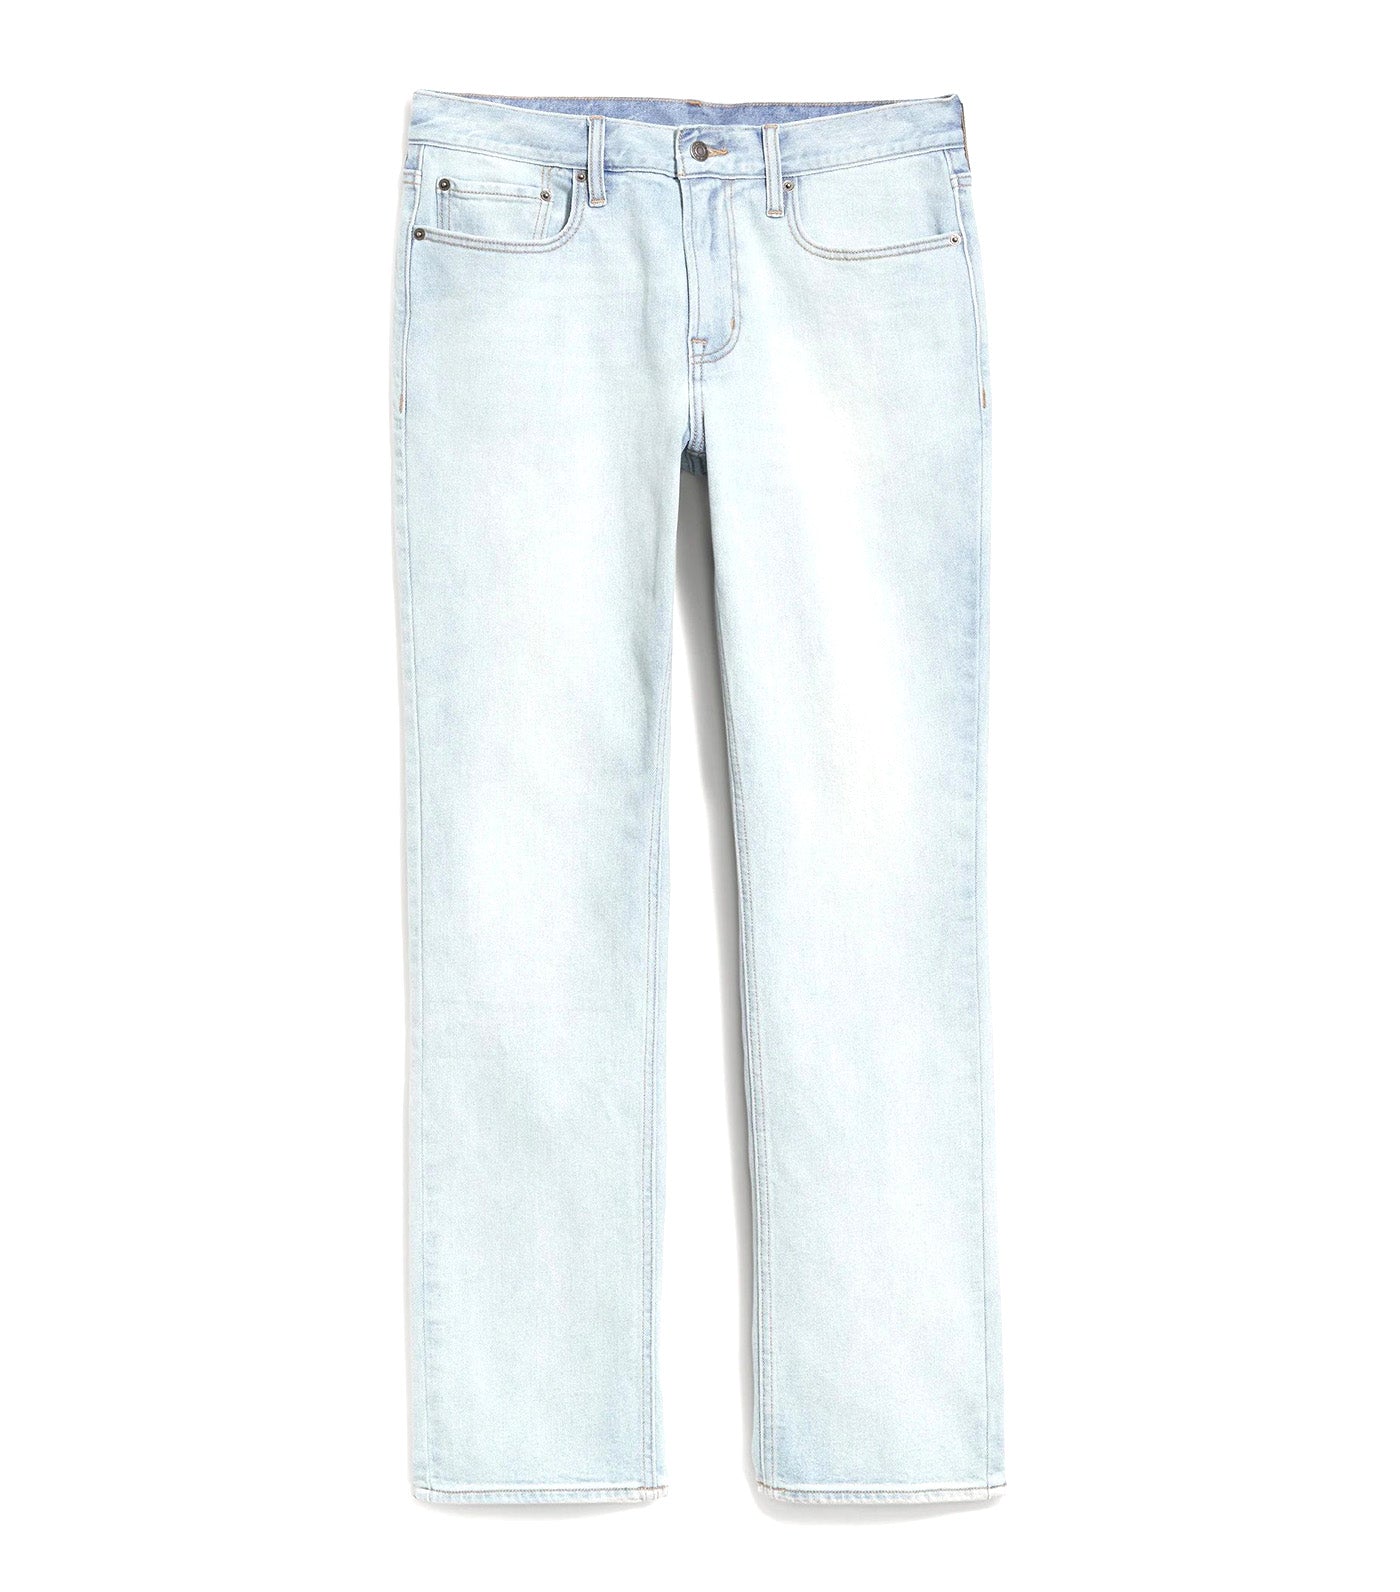 Straight Built-In Flex Light-Wash Jeans for Men Medium